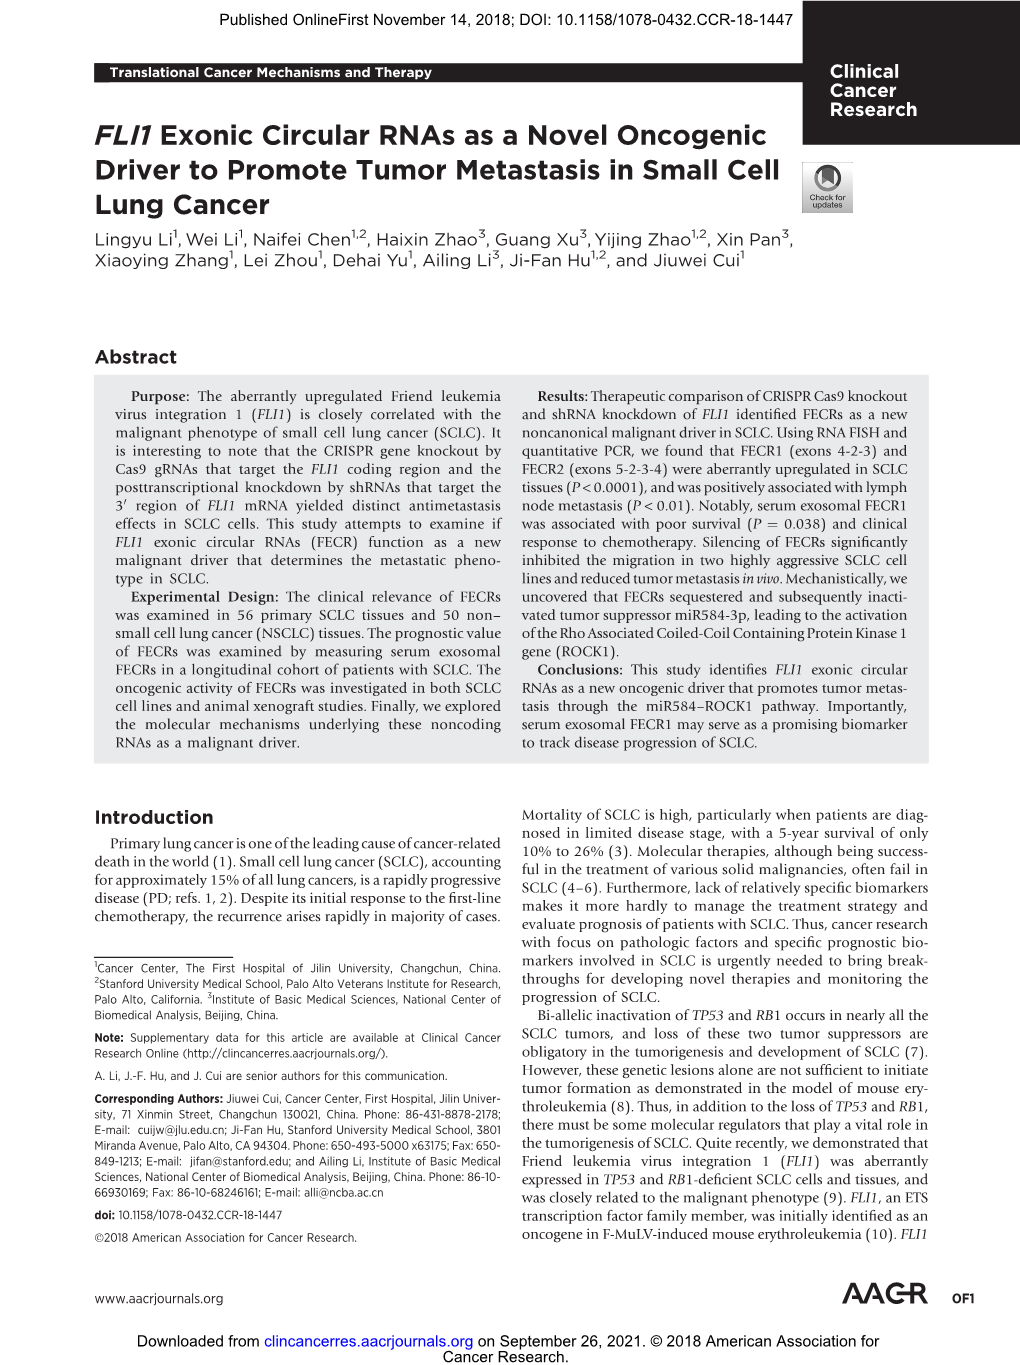 FLI1 Exonic Circular Rnas As a Novel Oncogenic Driver to Promote Tumor